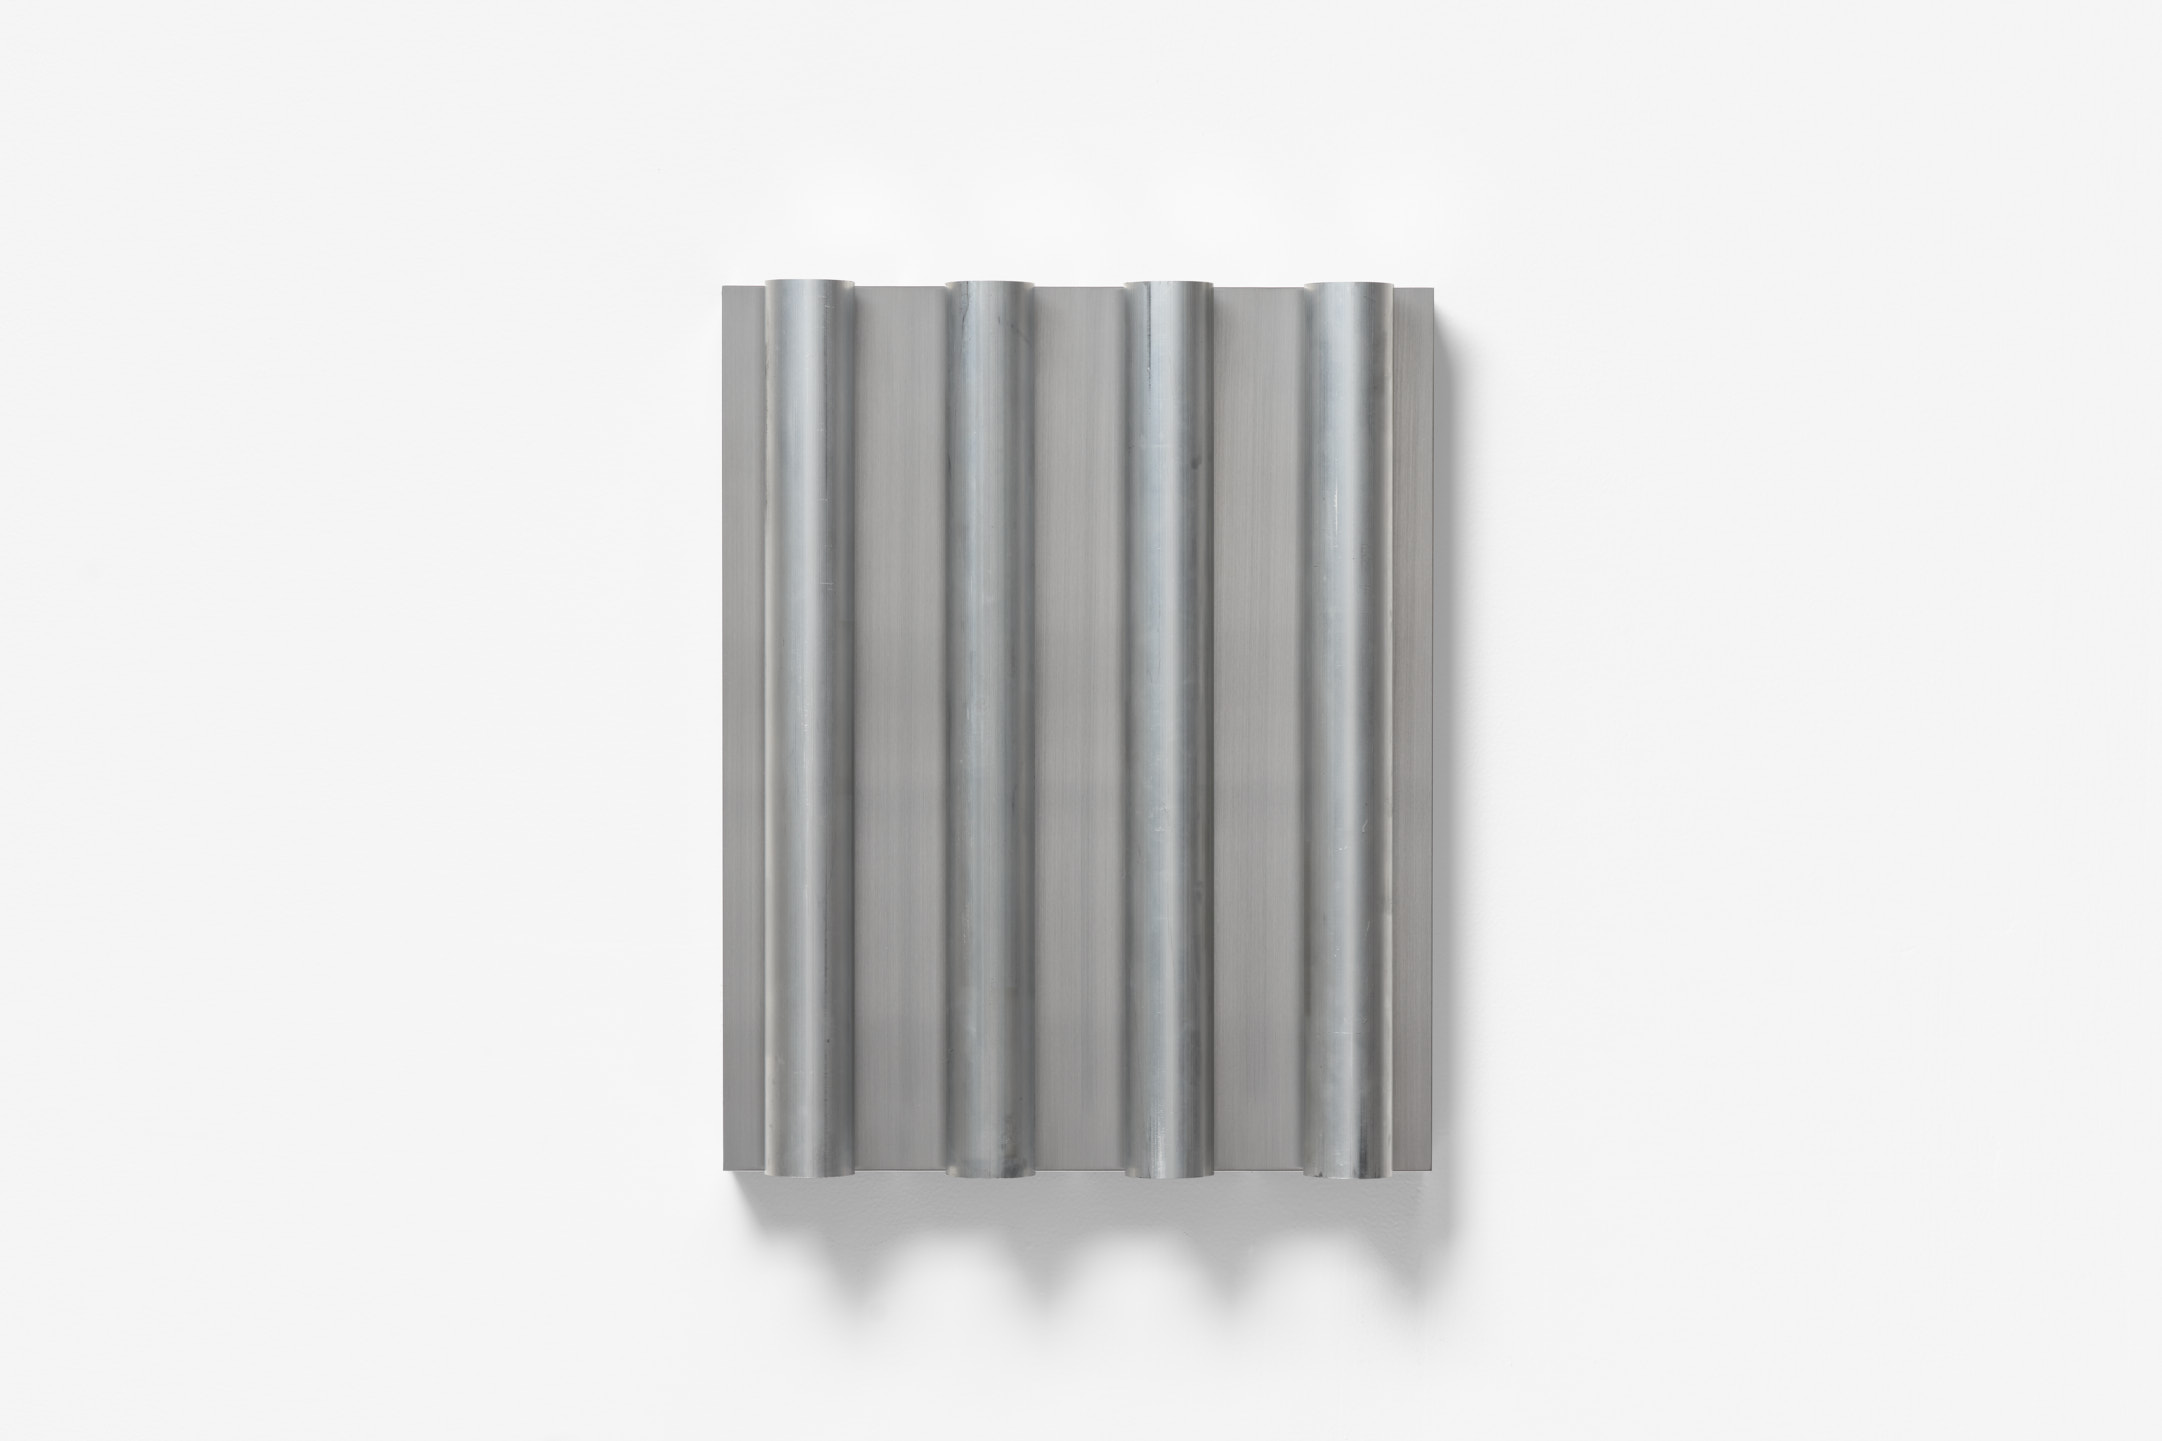 Aluminium wall reliefs - 40 x 50 cm Aluminium works,Group of 7